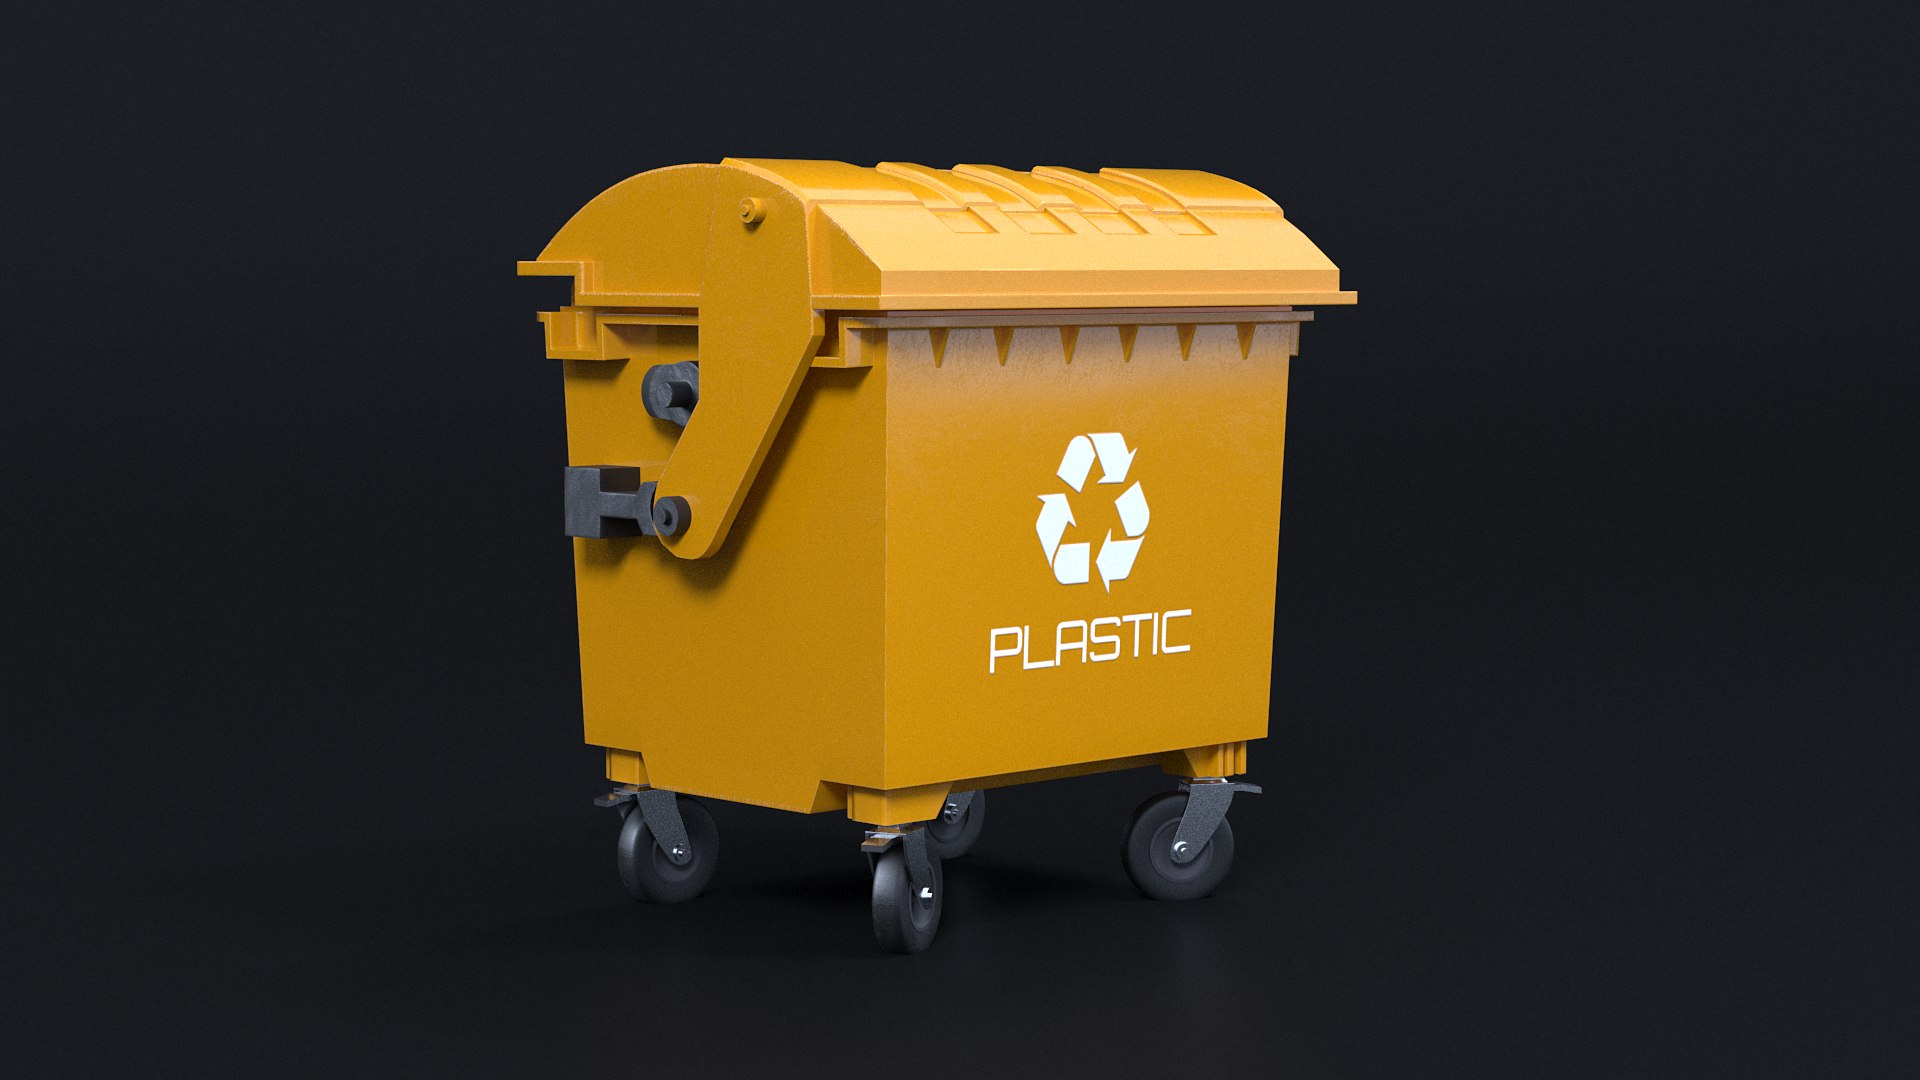 3D Plastic Garbage Container 500 l model https://p.turbosquid.com/ts-thumb/AO/Dhjxbg/EP/plancan_0000/png/1671972799/1920x1080/fit_q87/446737728a3d07556d5b8f8f9d8c1593ab24d0e3/plancan_0000.jpg